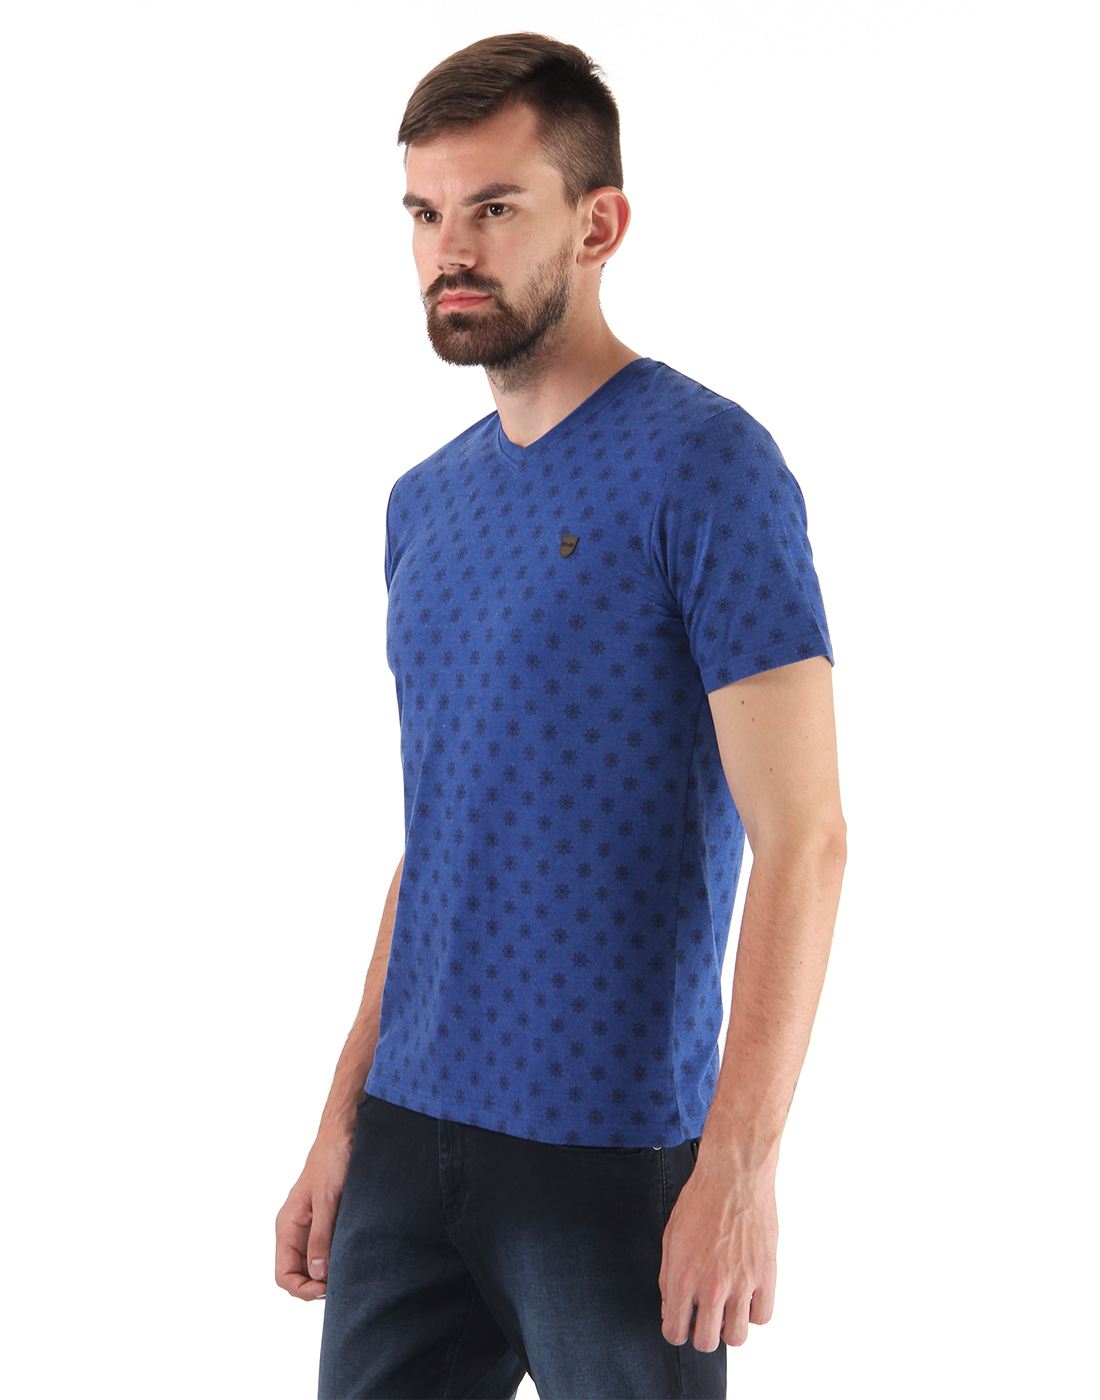 Cloak & Decker by Monte Carlo Men Blue T-Shirt